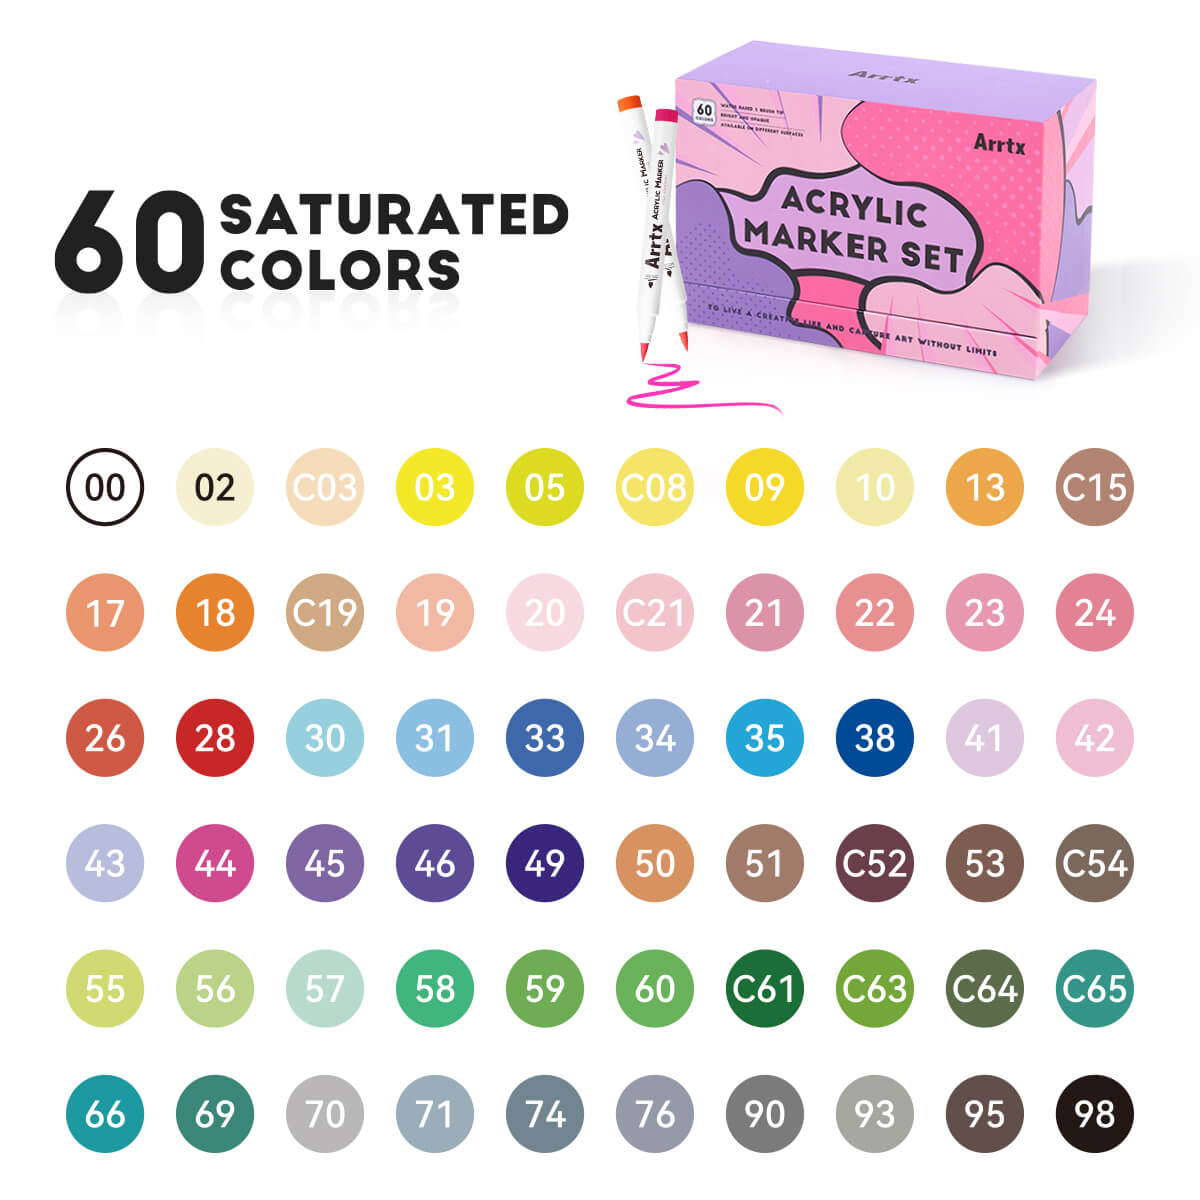 Arrtx Farbstifte, 60 Farben, Acryl-Marker, Pinselspitze, Künstlerbedarf, 60B